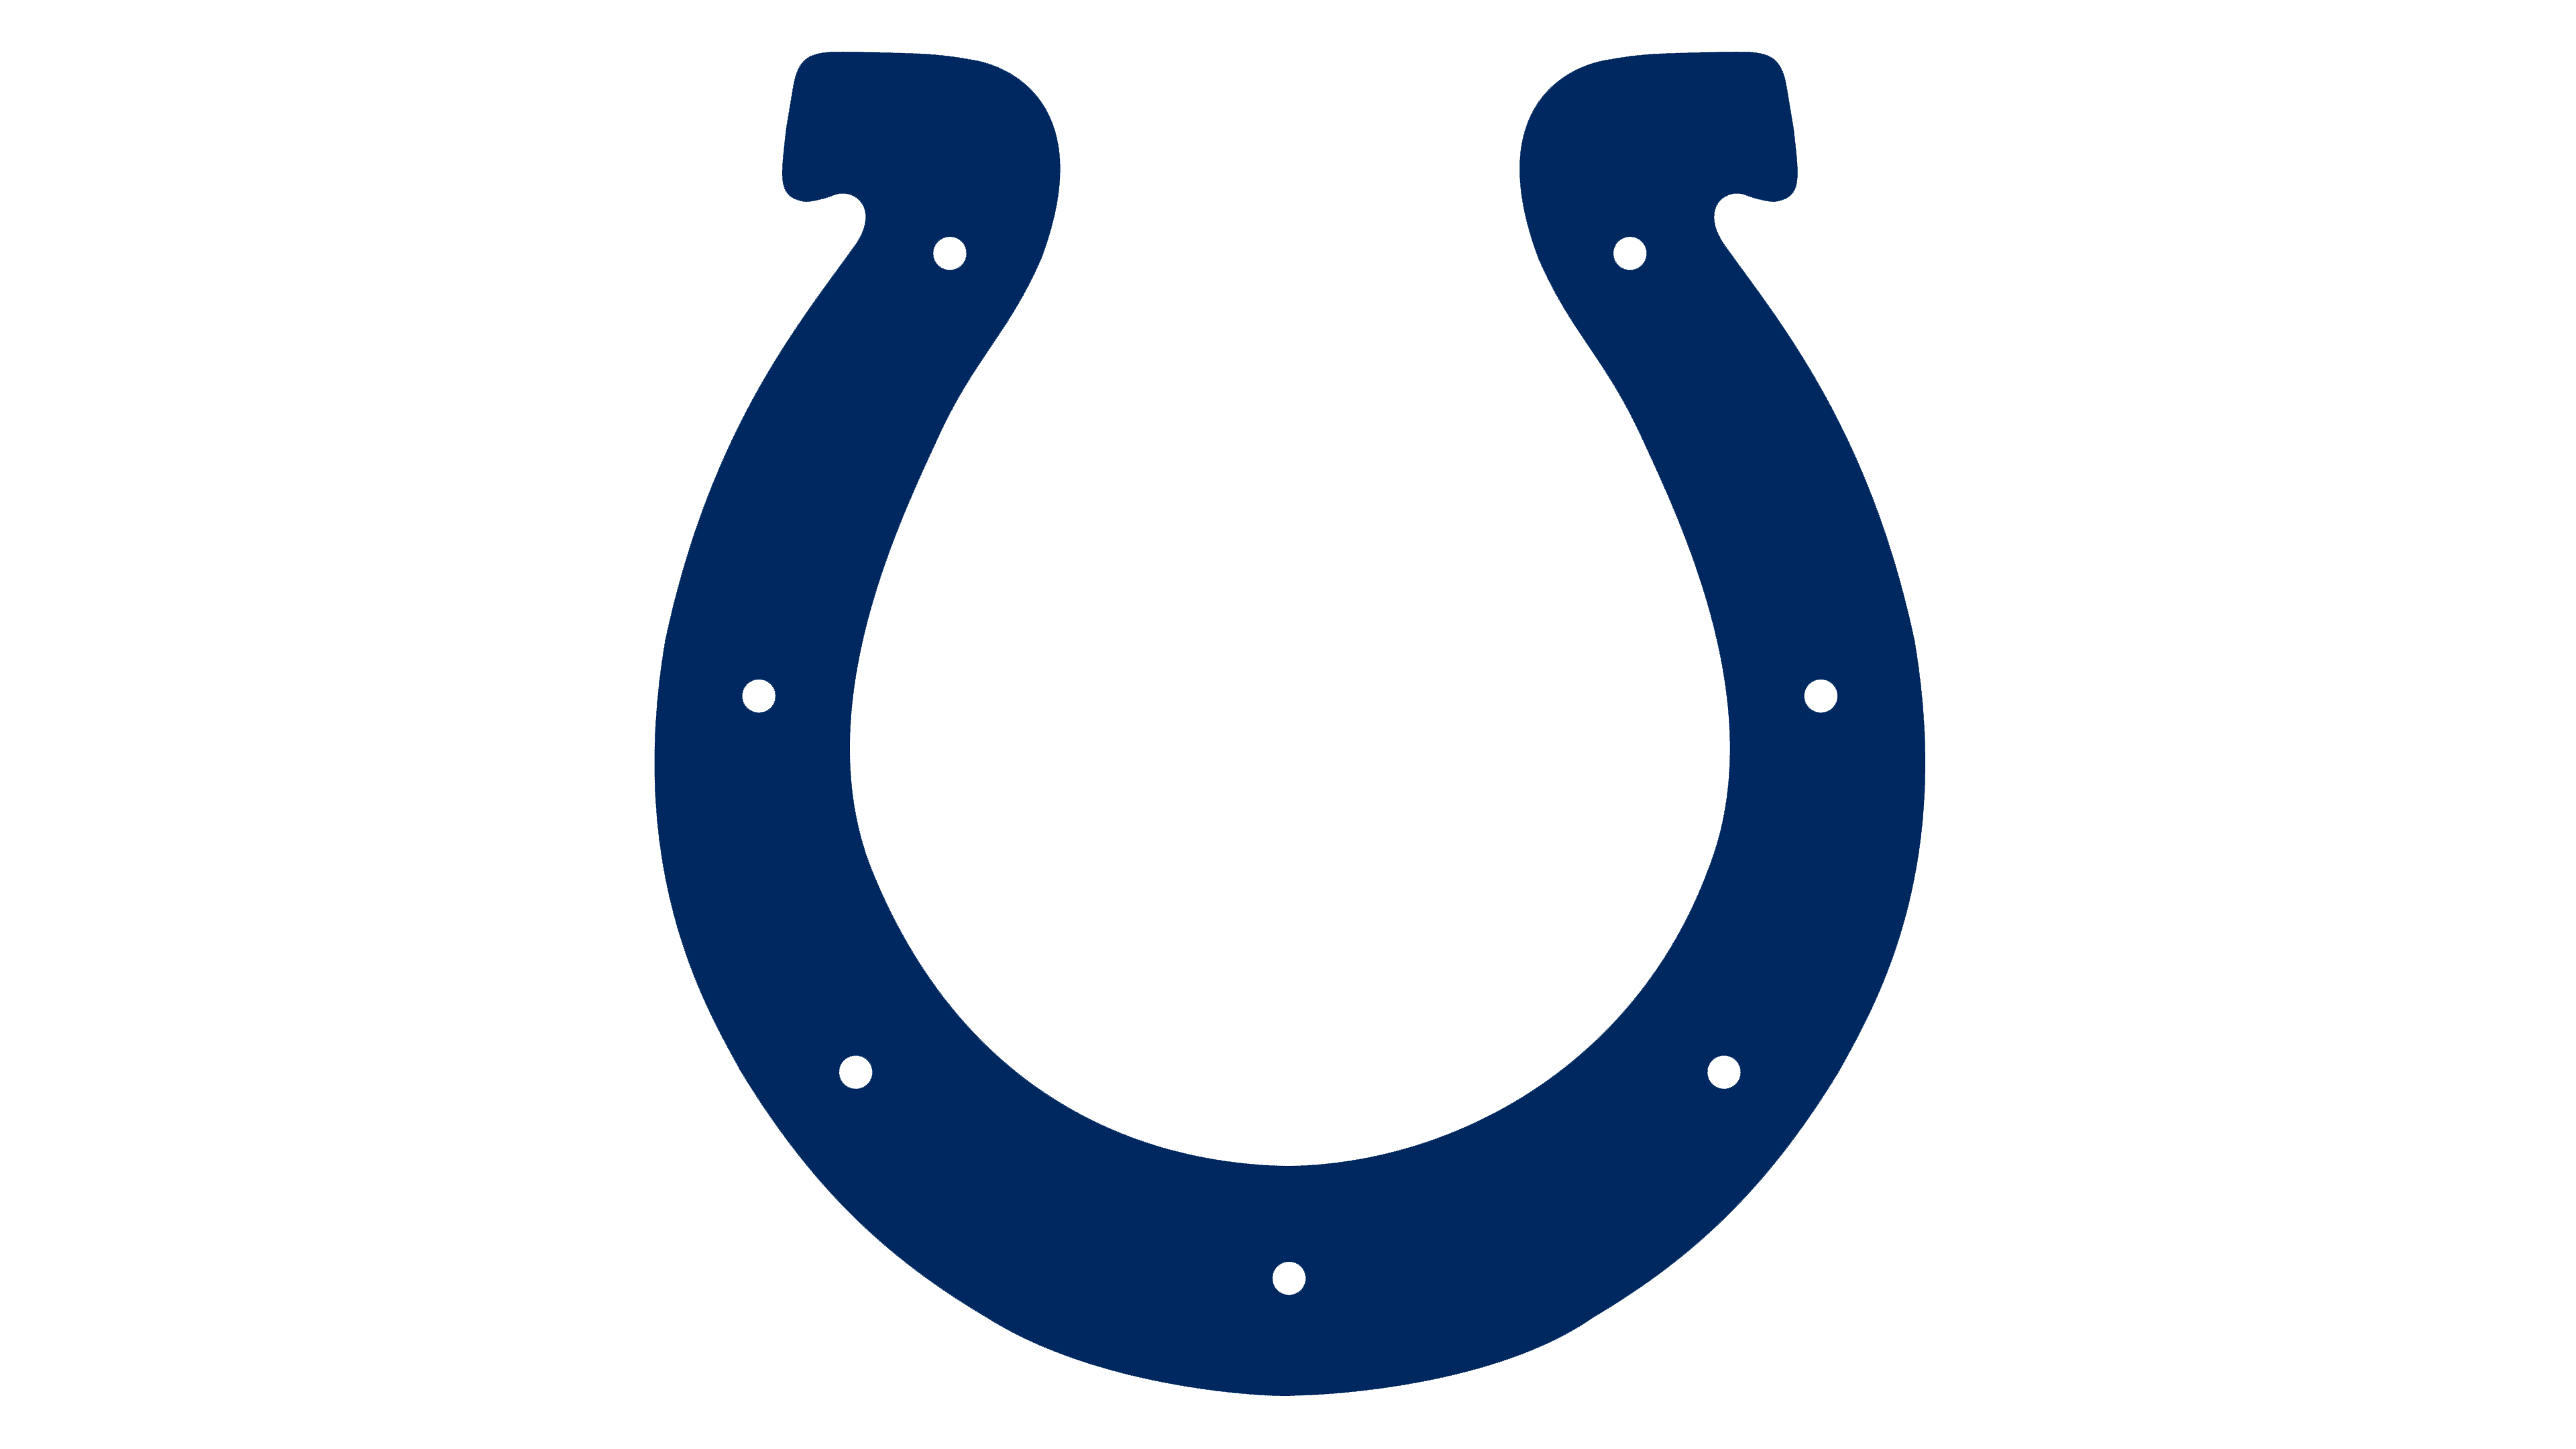 Indianapolis Colts logo and history, Symbol, Helmets, Uniform Nfl